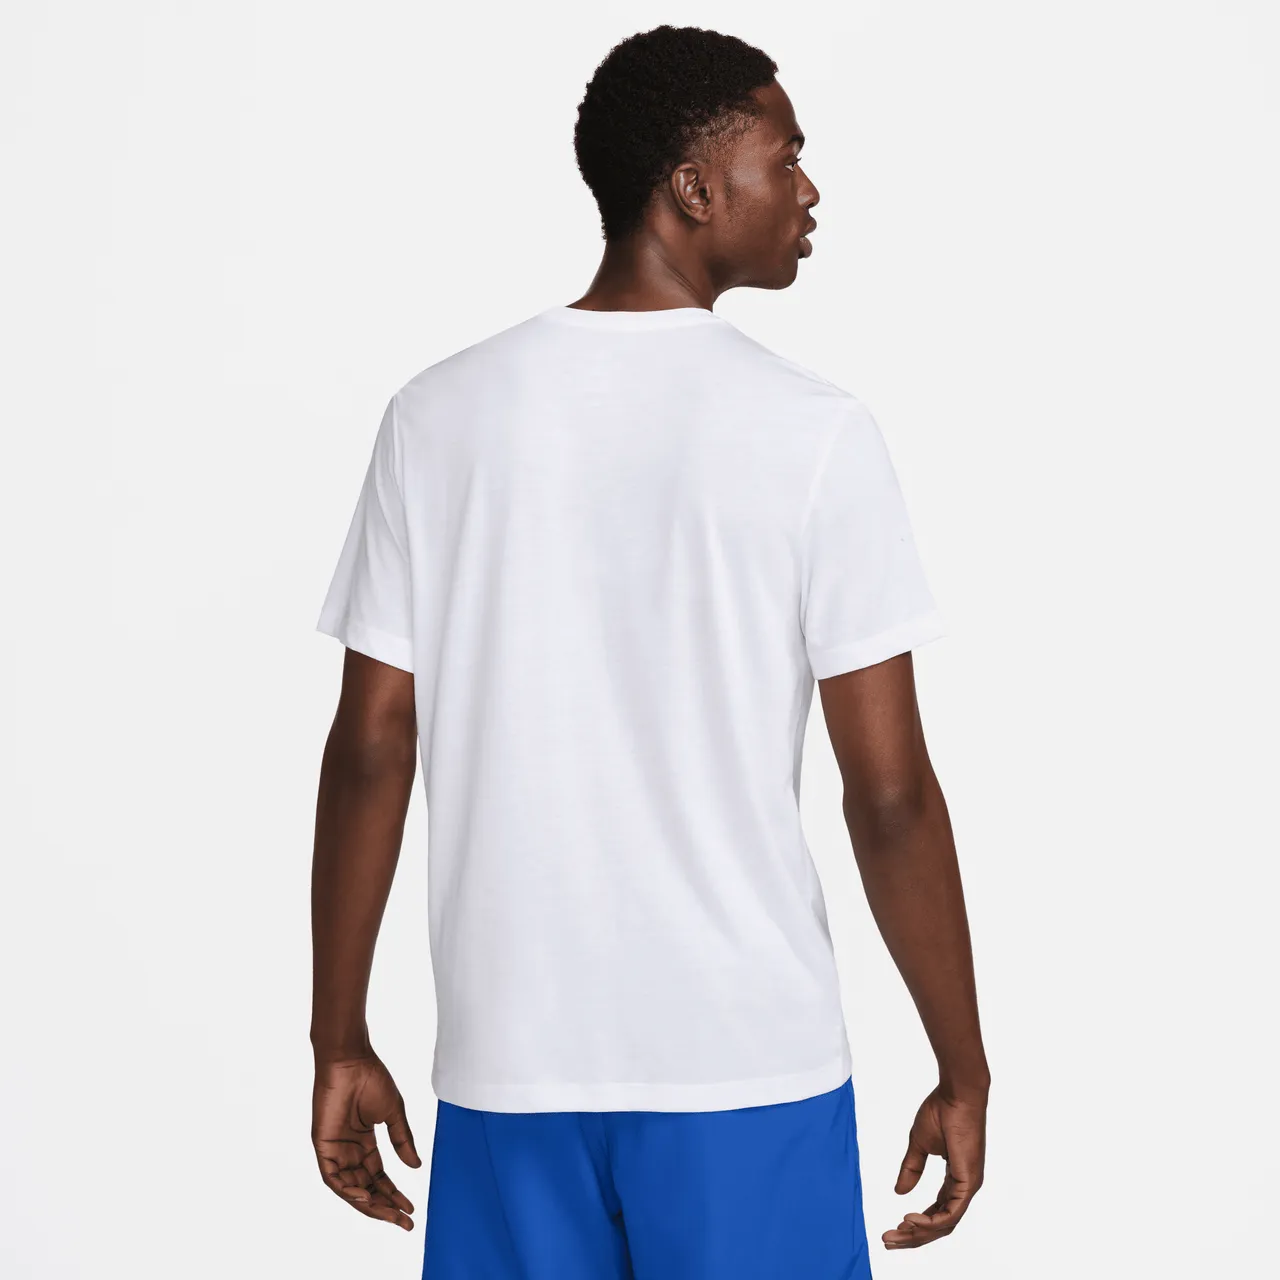 Nike Dri-FIT Men's Fitness T-Shirt - White - Polyester